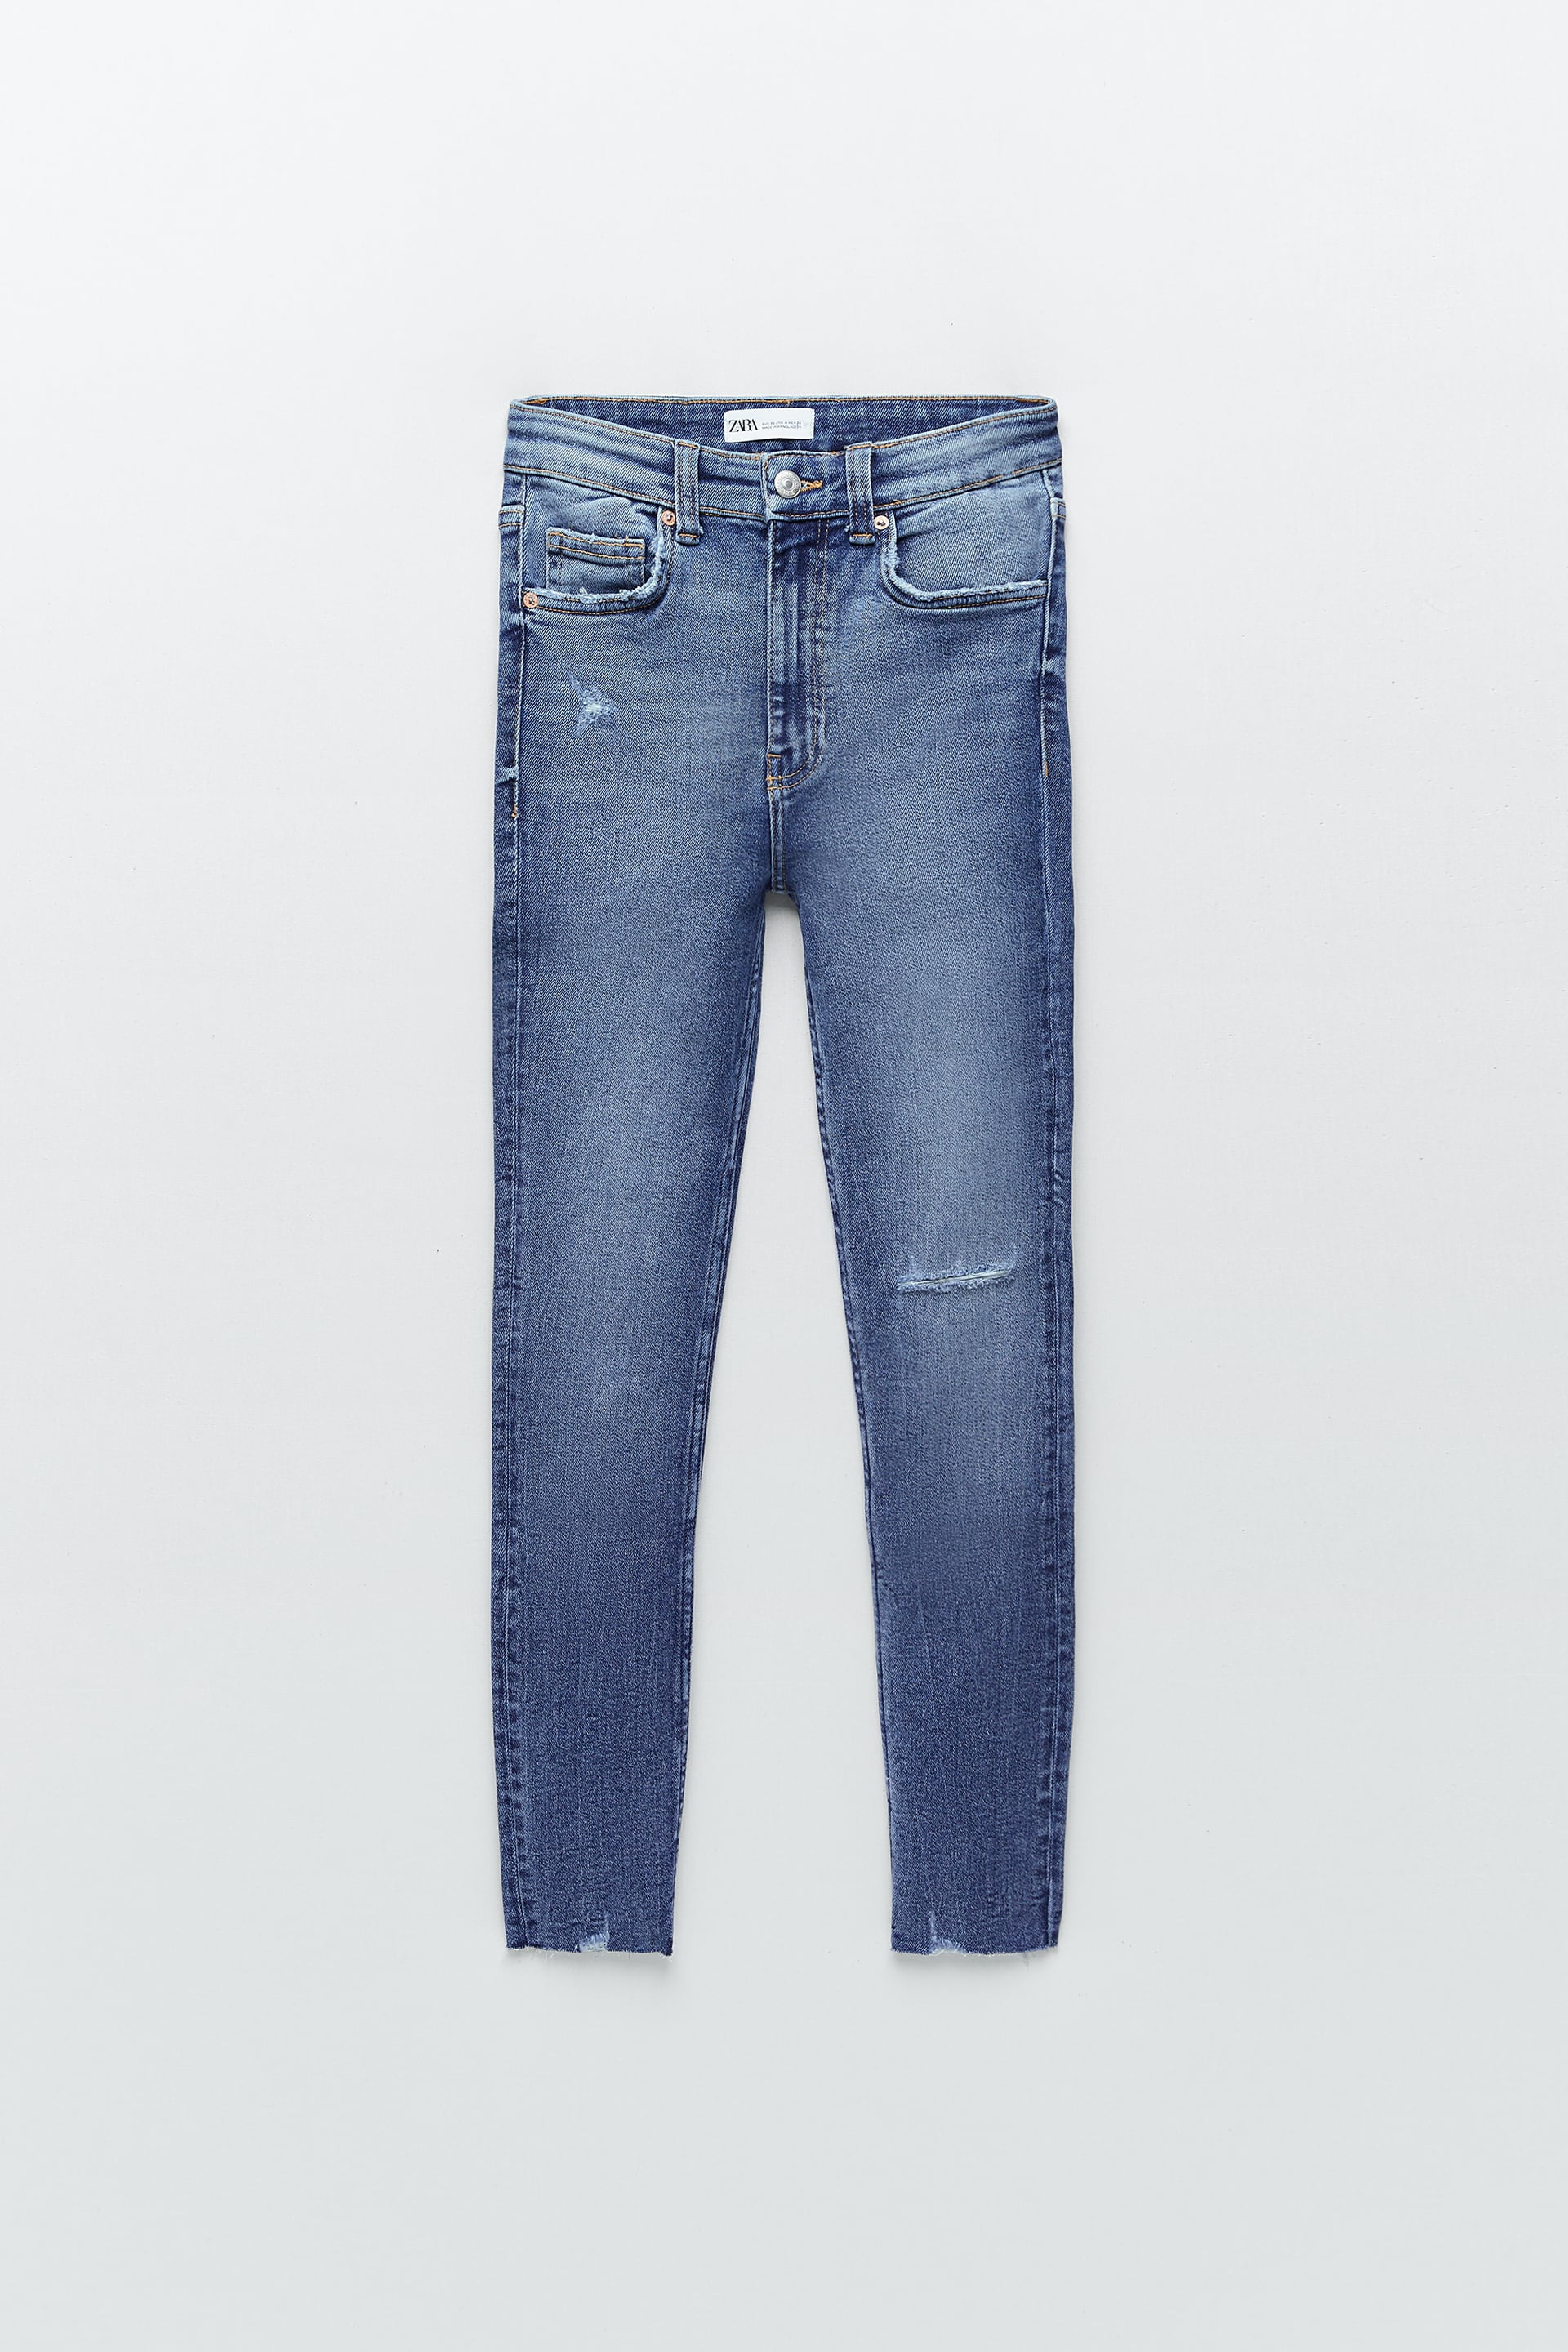 NEW Zara Blue Vintage Skinny Hi Rise Ankle Length Jeans ( Style